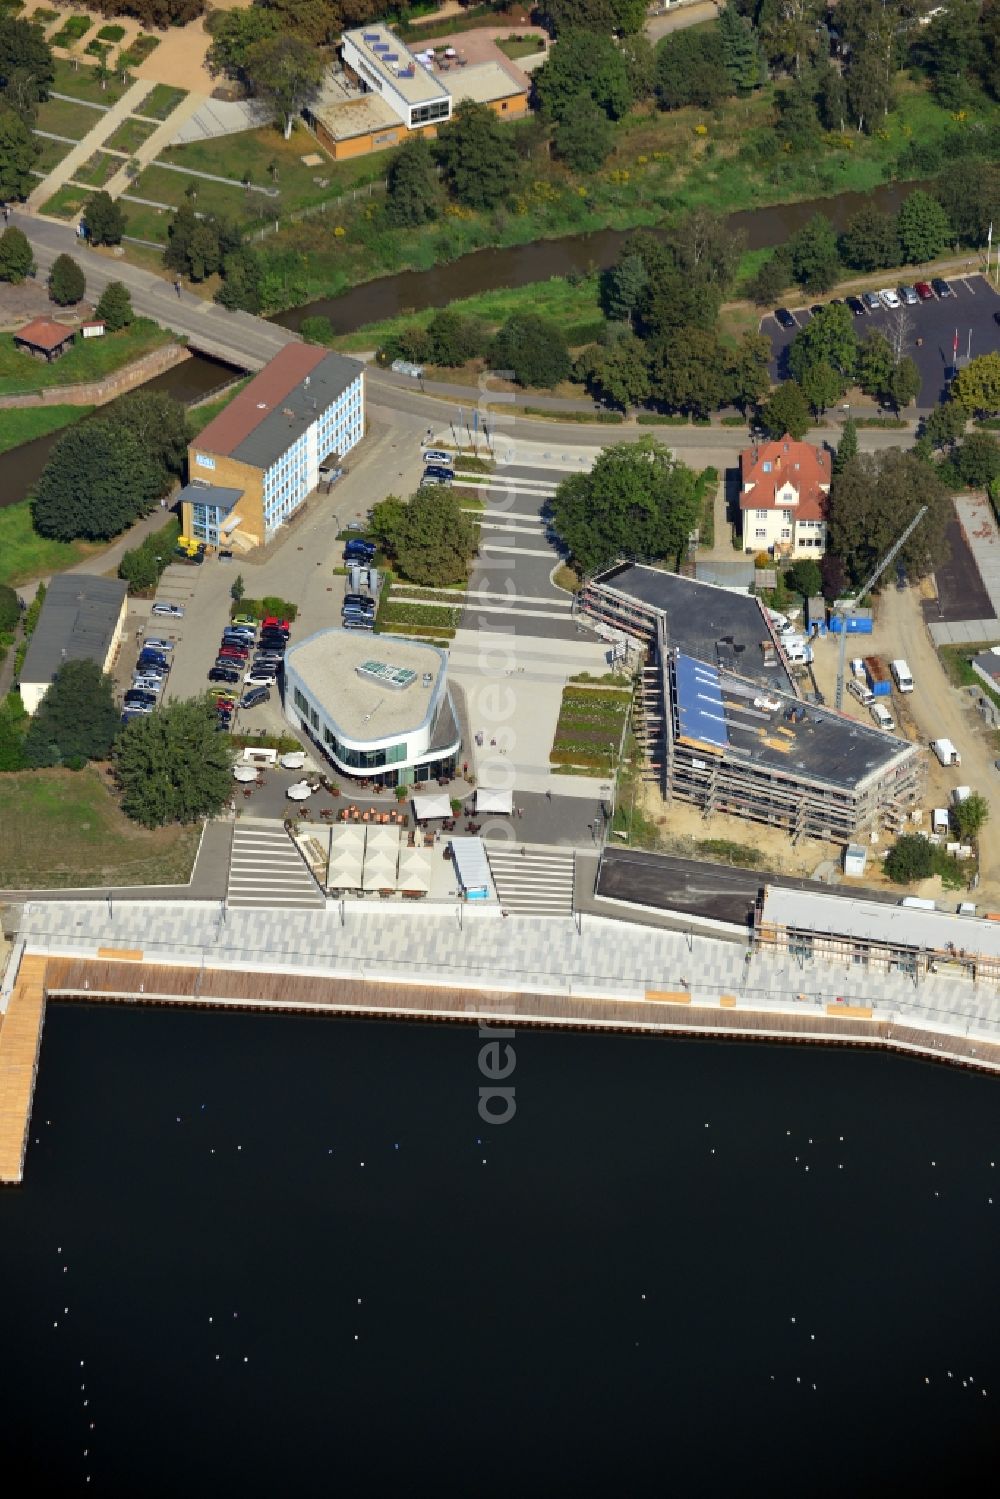 Aerial photograph Senftenberg - View of new construction of the city port Senftenberg at Senftenberger Lake in Brandenburg